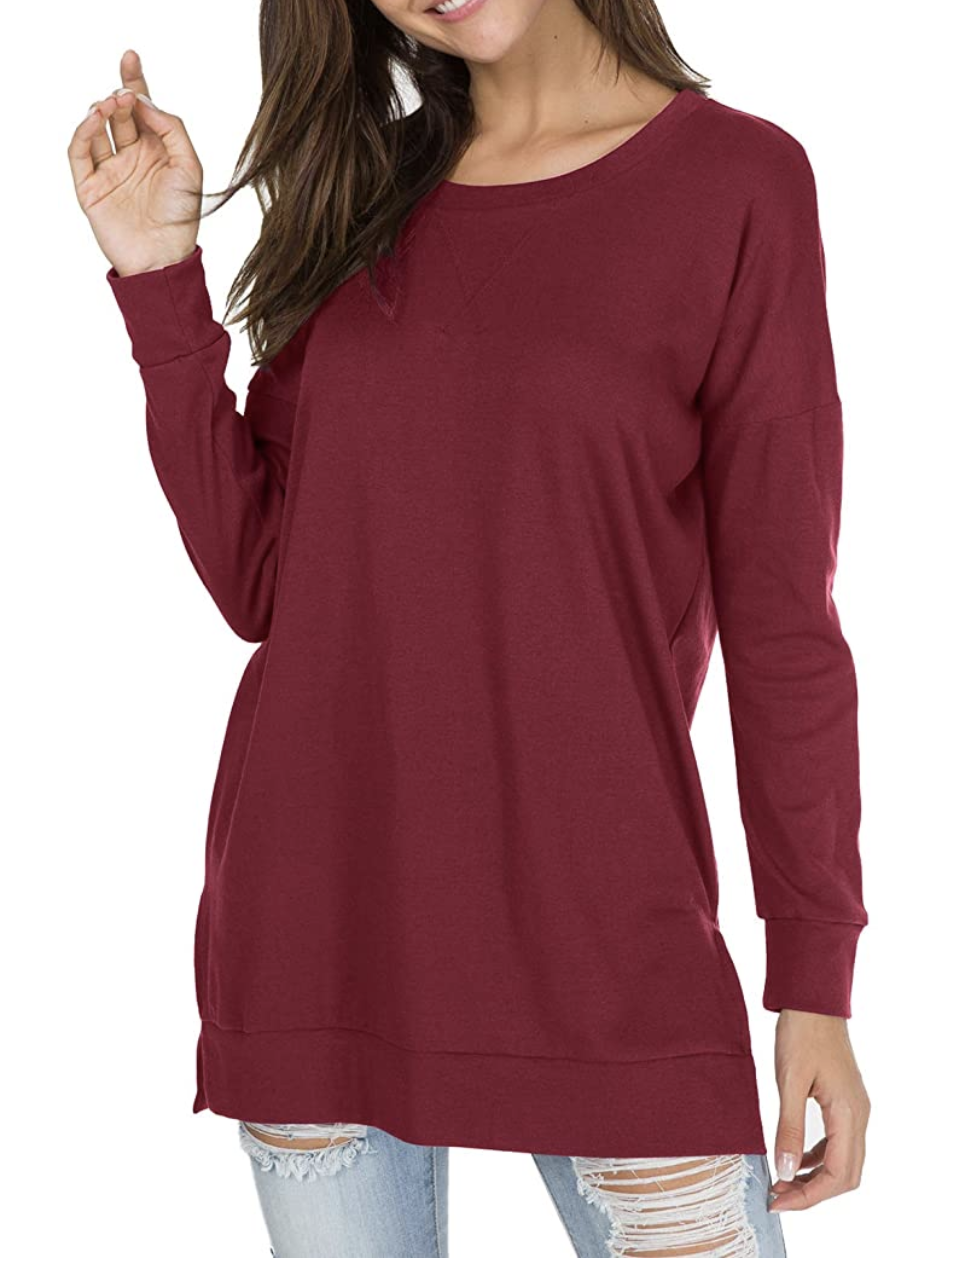 levaca Women's Fall Long Sleeve Side Split Loose Casual Pullover Tunic Top